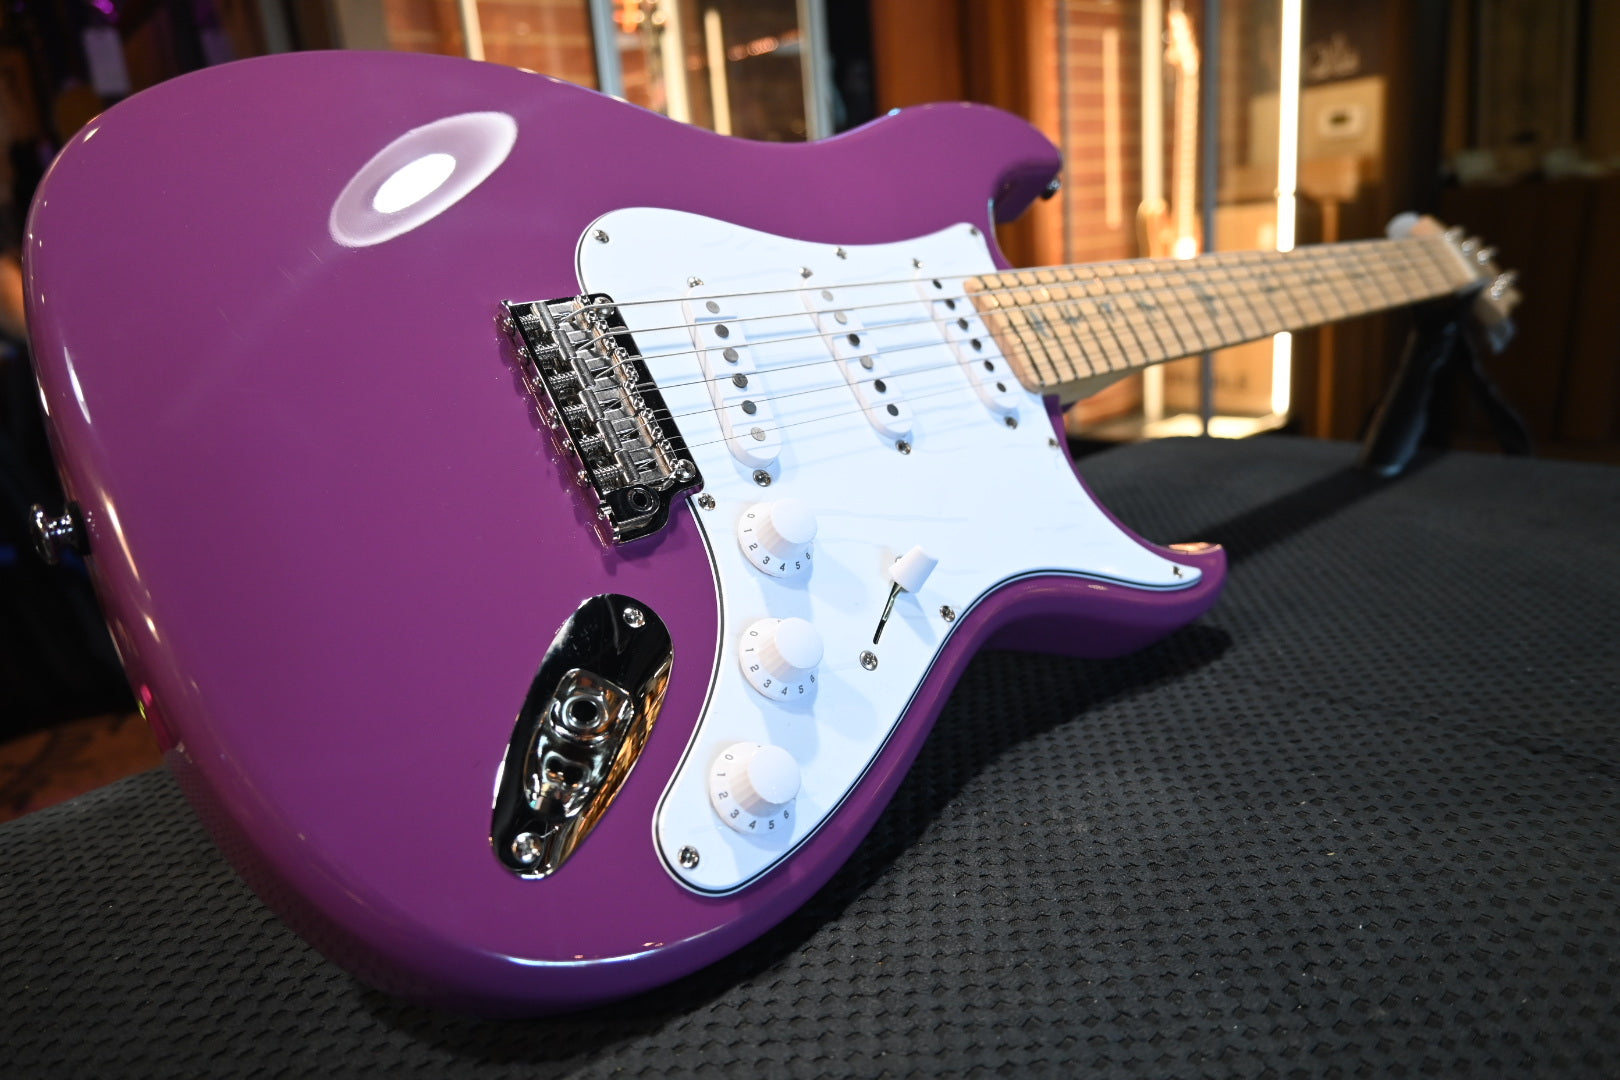 PRS SE Silver Sky Maple - Summit Purple Guitar #9573 - Danville Music